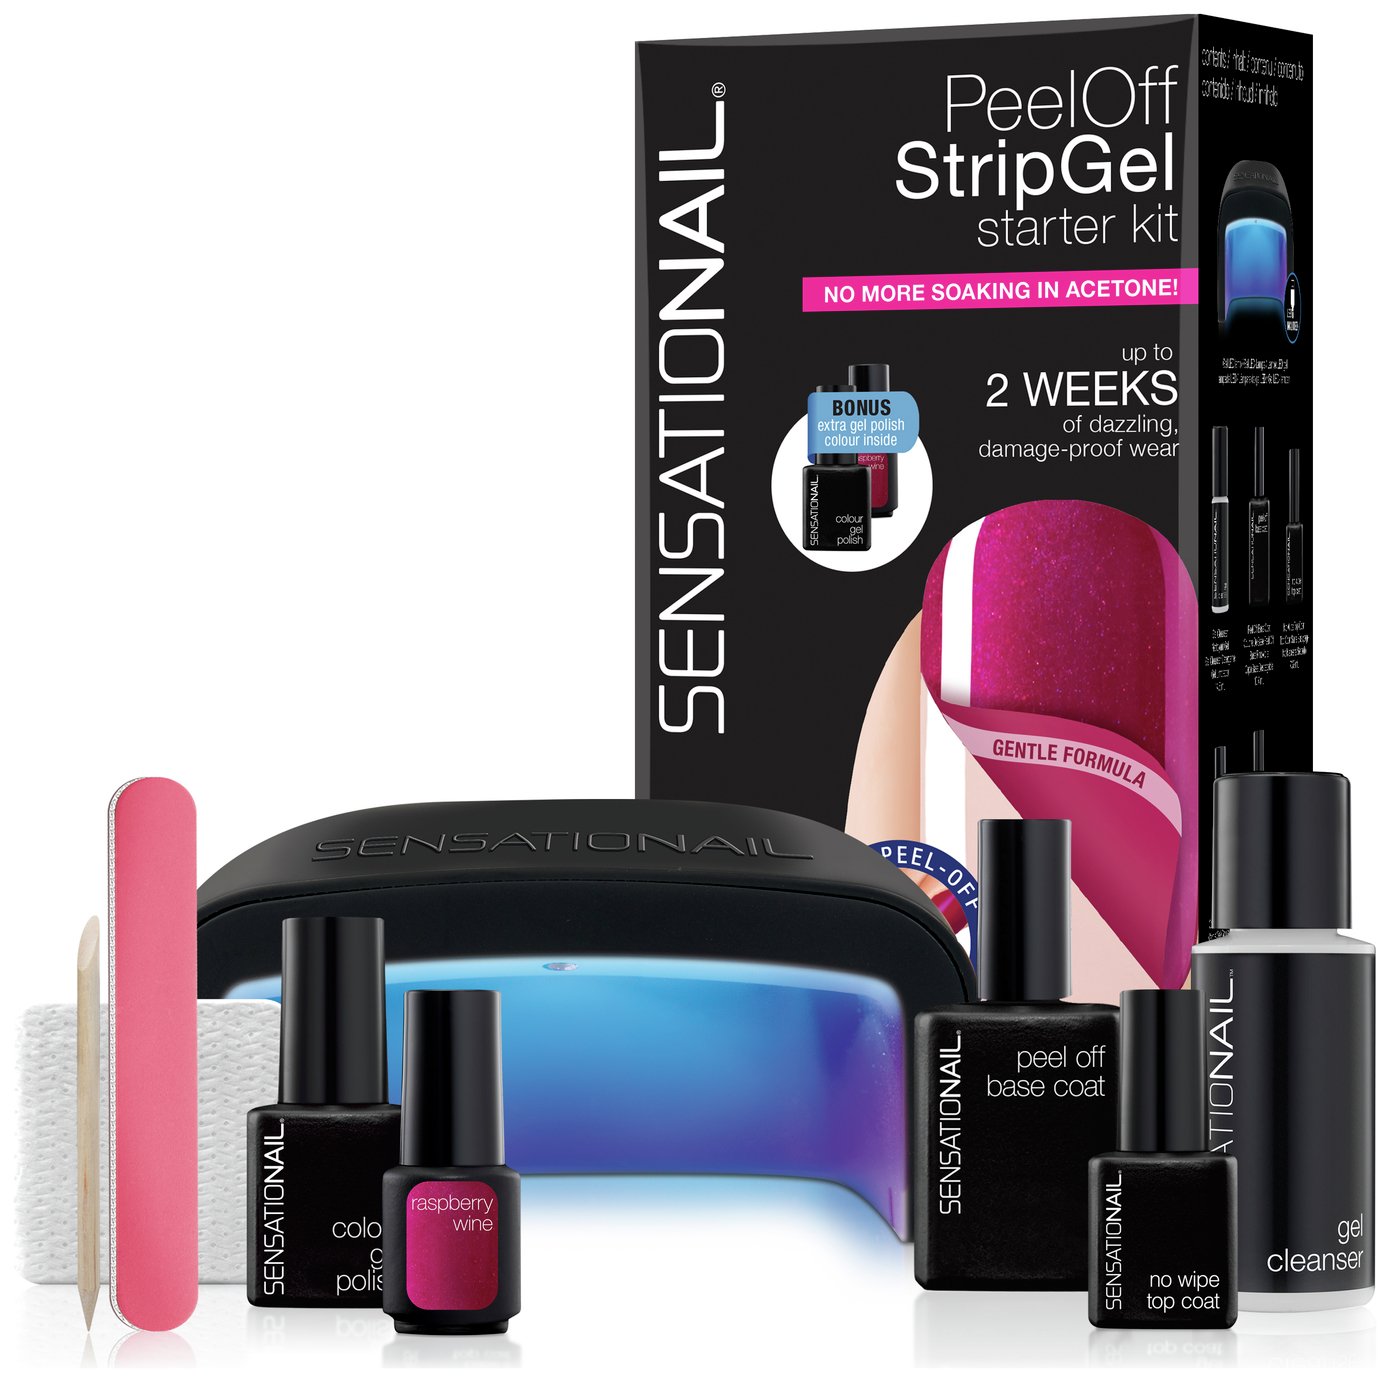 SensatioNail Peel Off Strip Gel Starter Kit review